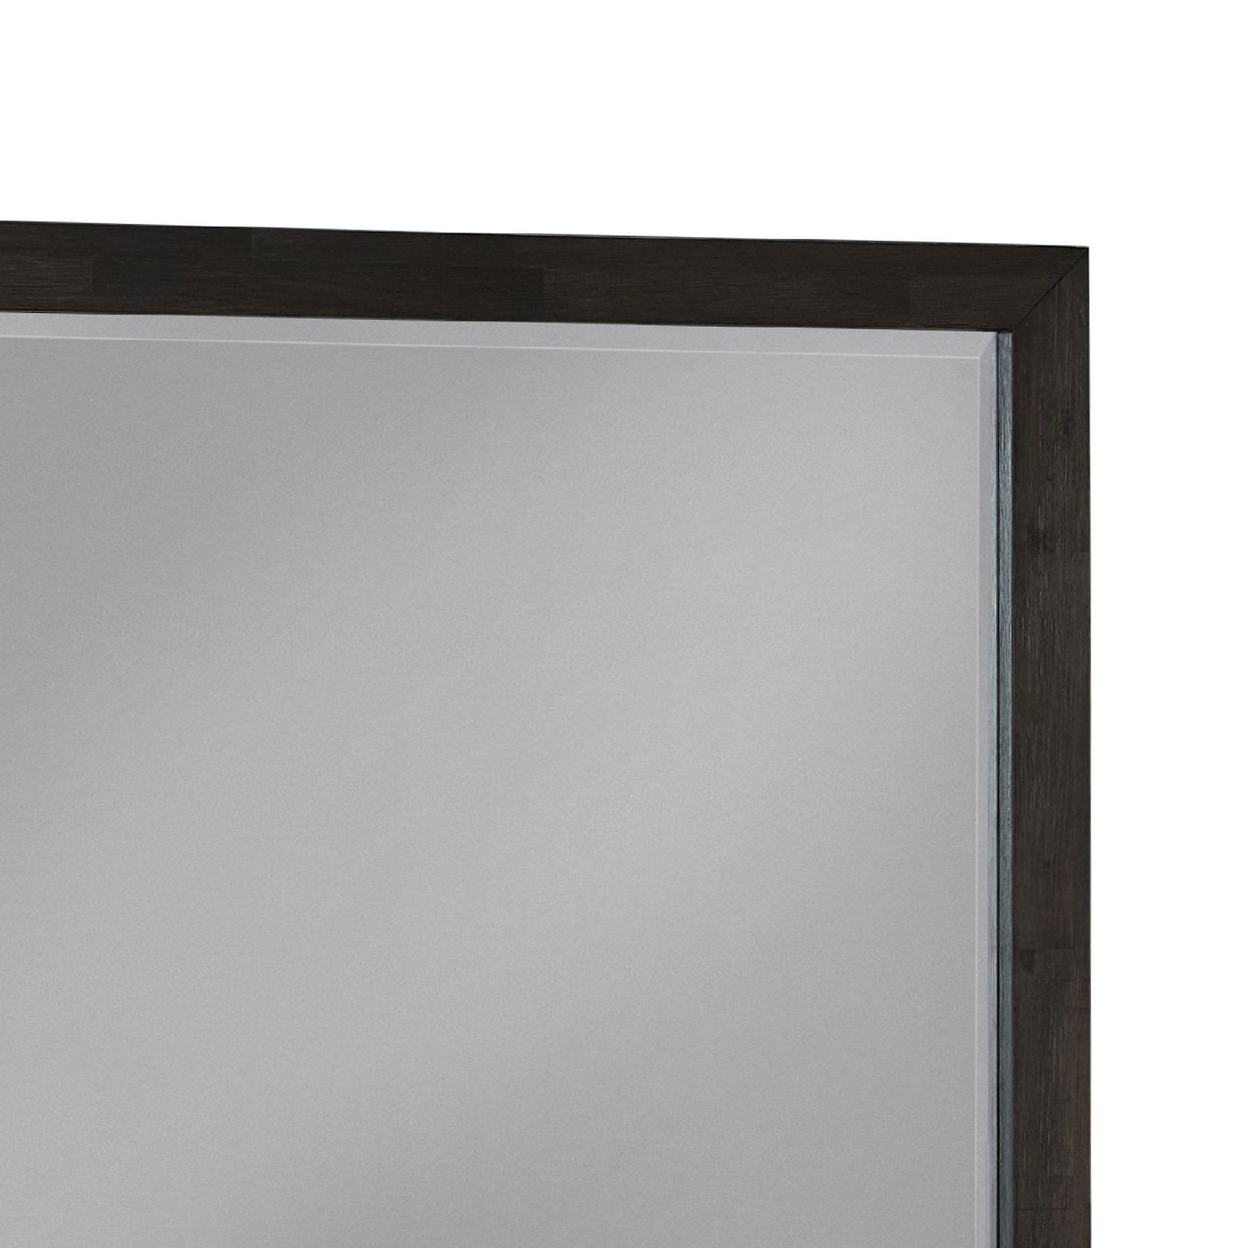 Moe 47 Inch Dresser Mirror With Rectangular Wood Frame, Espresso Brown- Saltoro Sherpi